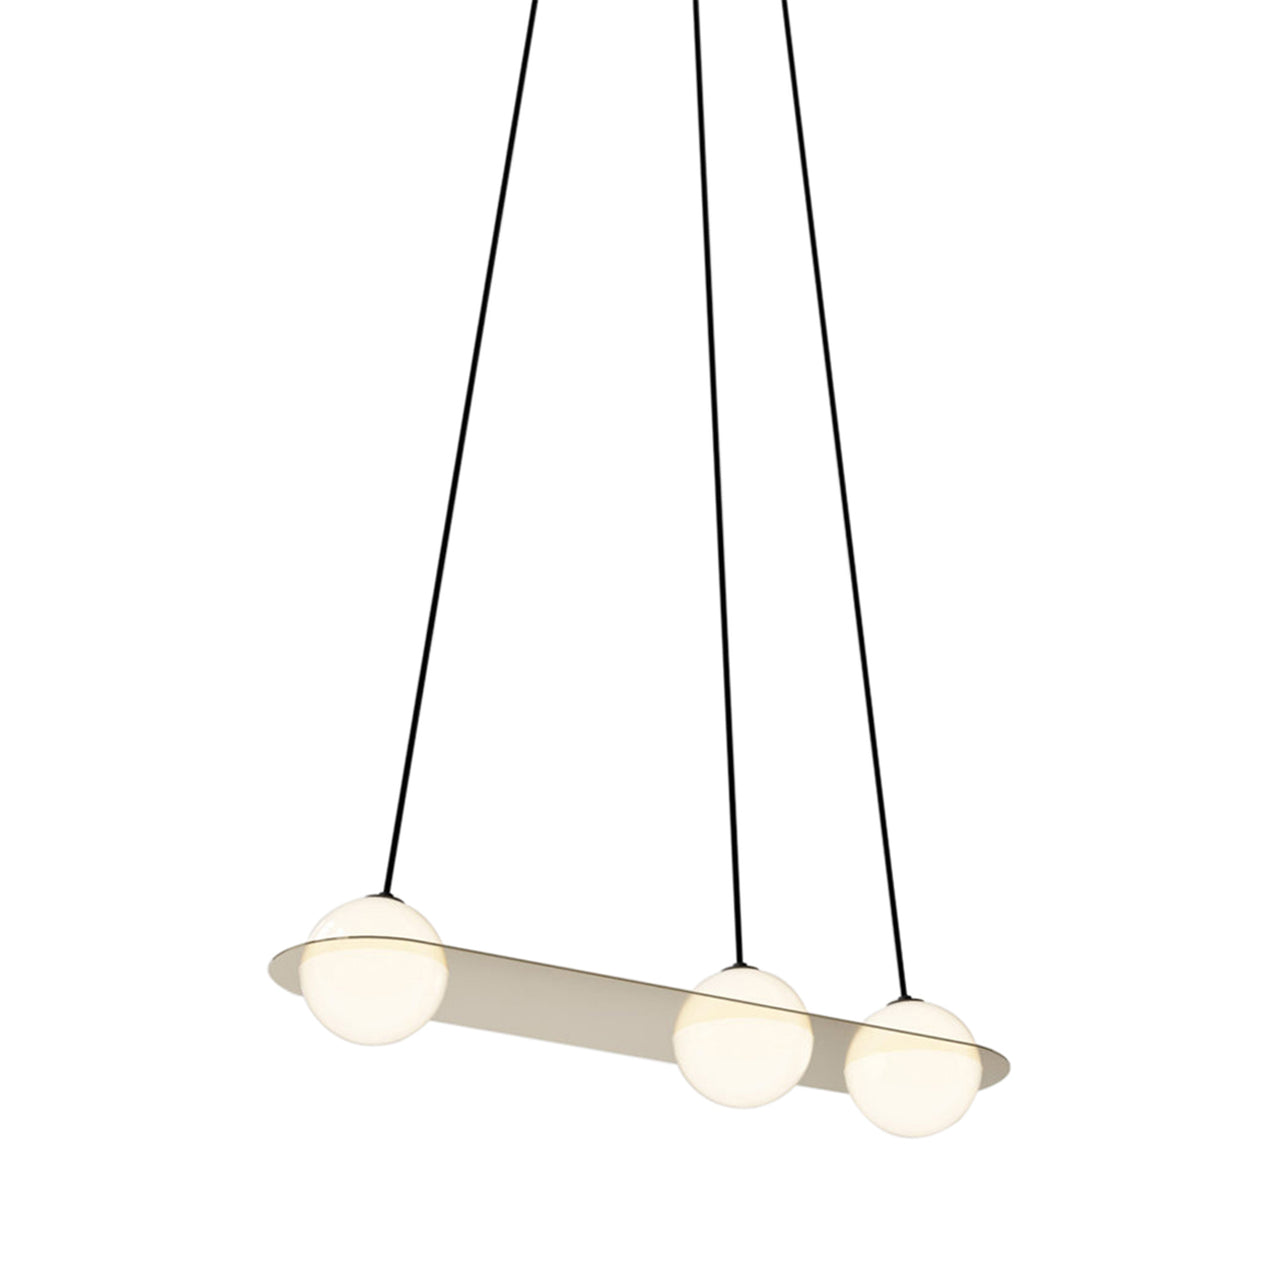 Laurent 07 Suspension Lamp: Brass + Black + Angled Wires